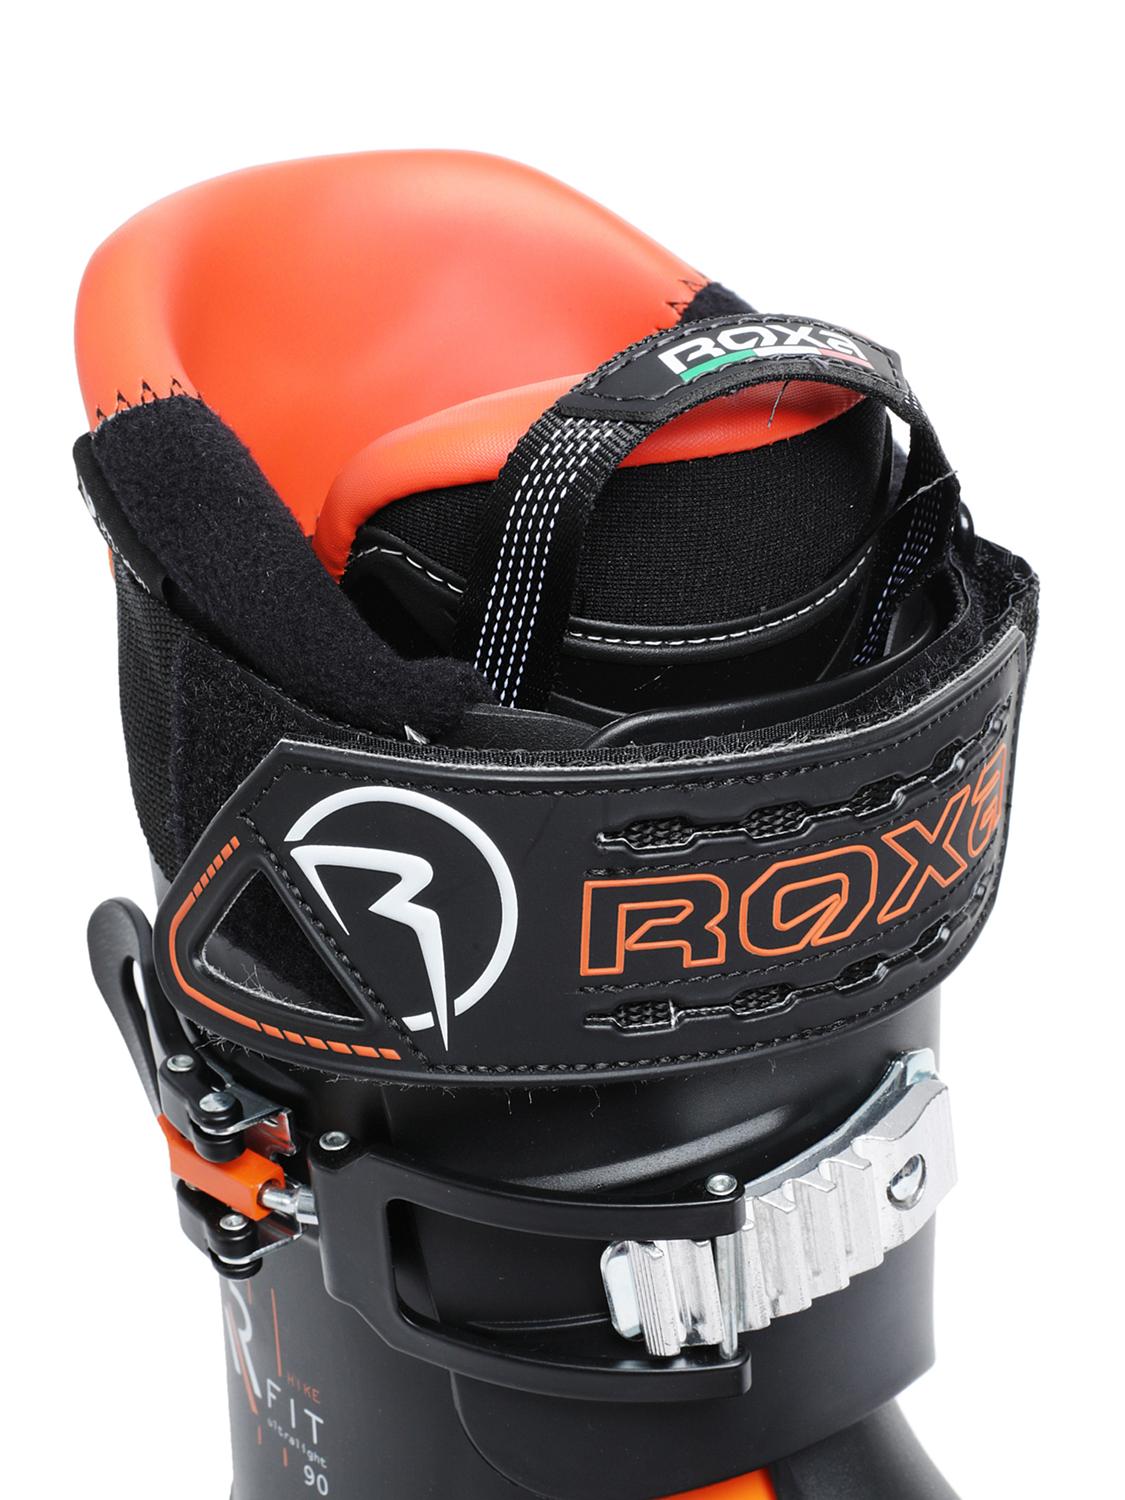 Горнолыжные ботинки ROXA Rfit Hike 90 GW Black/Orange